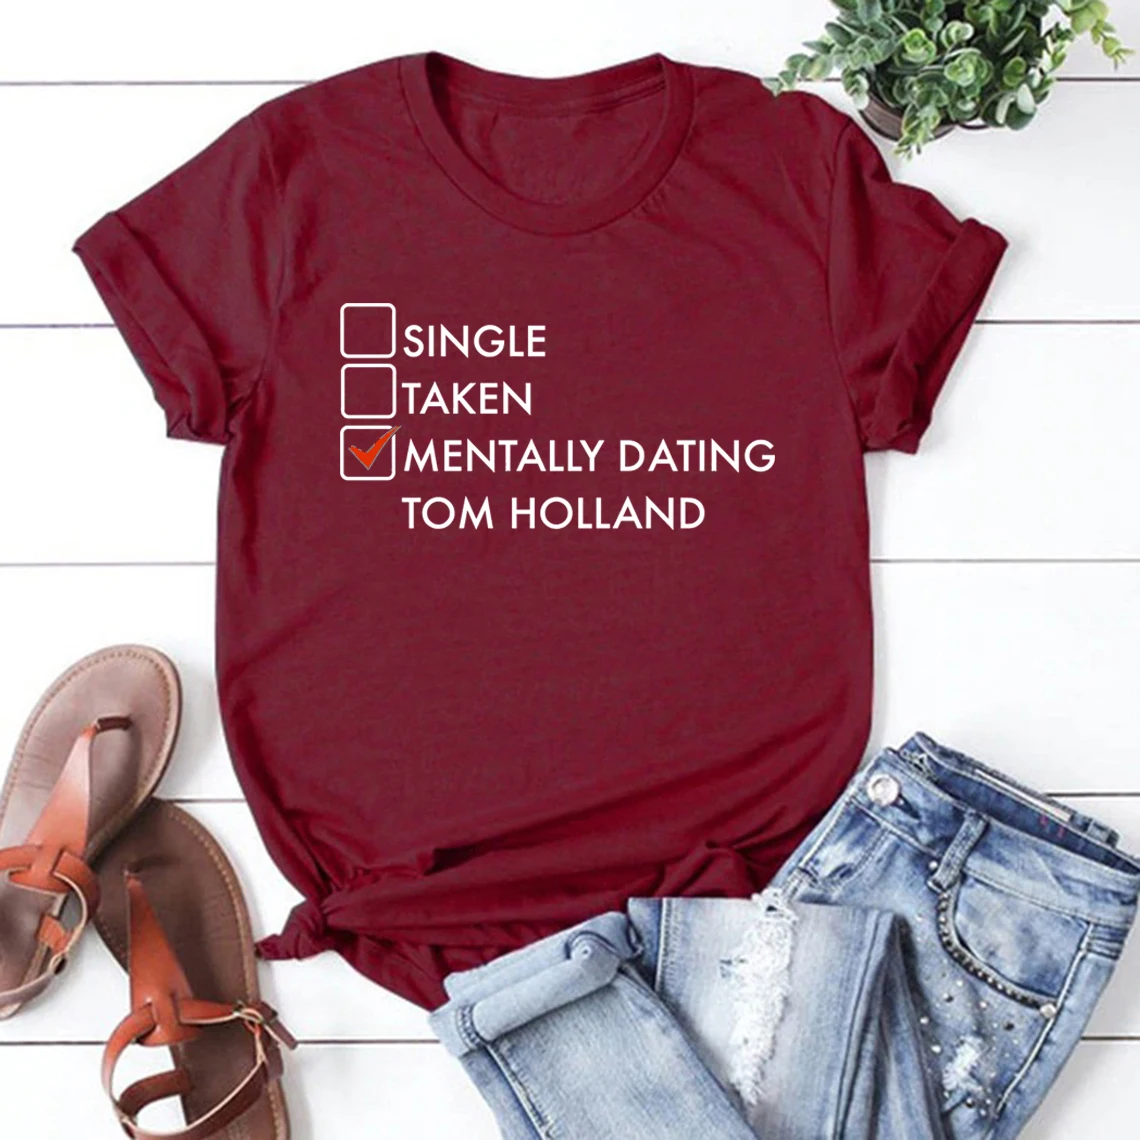 Mentally Dating Tom Holland T-Shirt Summer Short Sleeve Crewneck Casual T Shirt Fashion Shirts for Fans Men Women Tshirts Tops vintage graphic tees